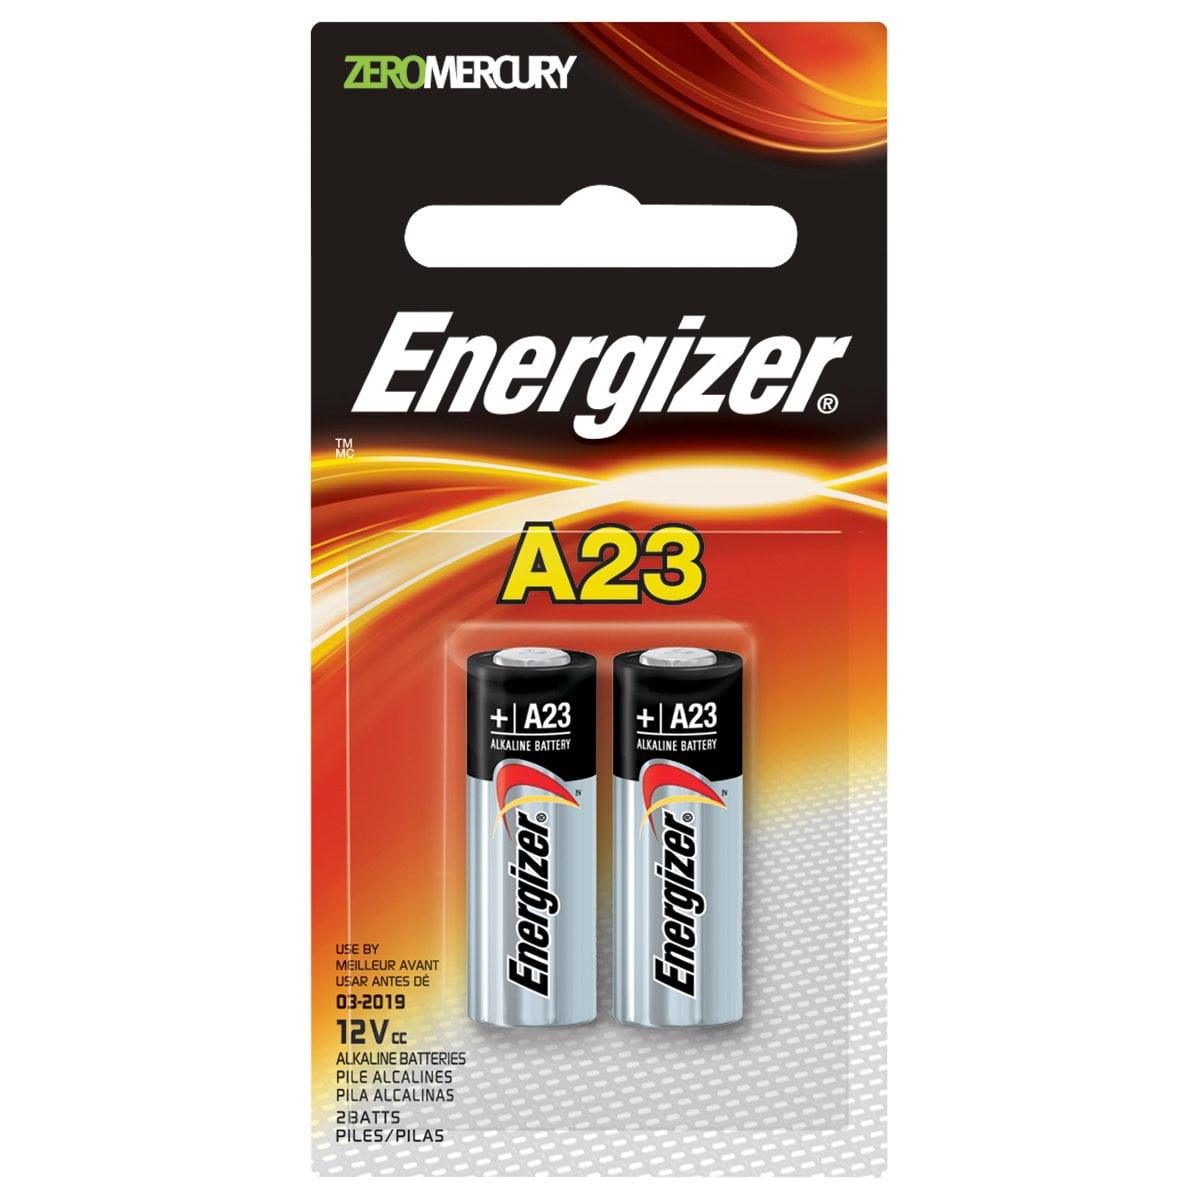 Energizer Zero Mercury Alkaline Battery A23 2 Batteries